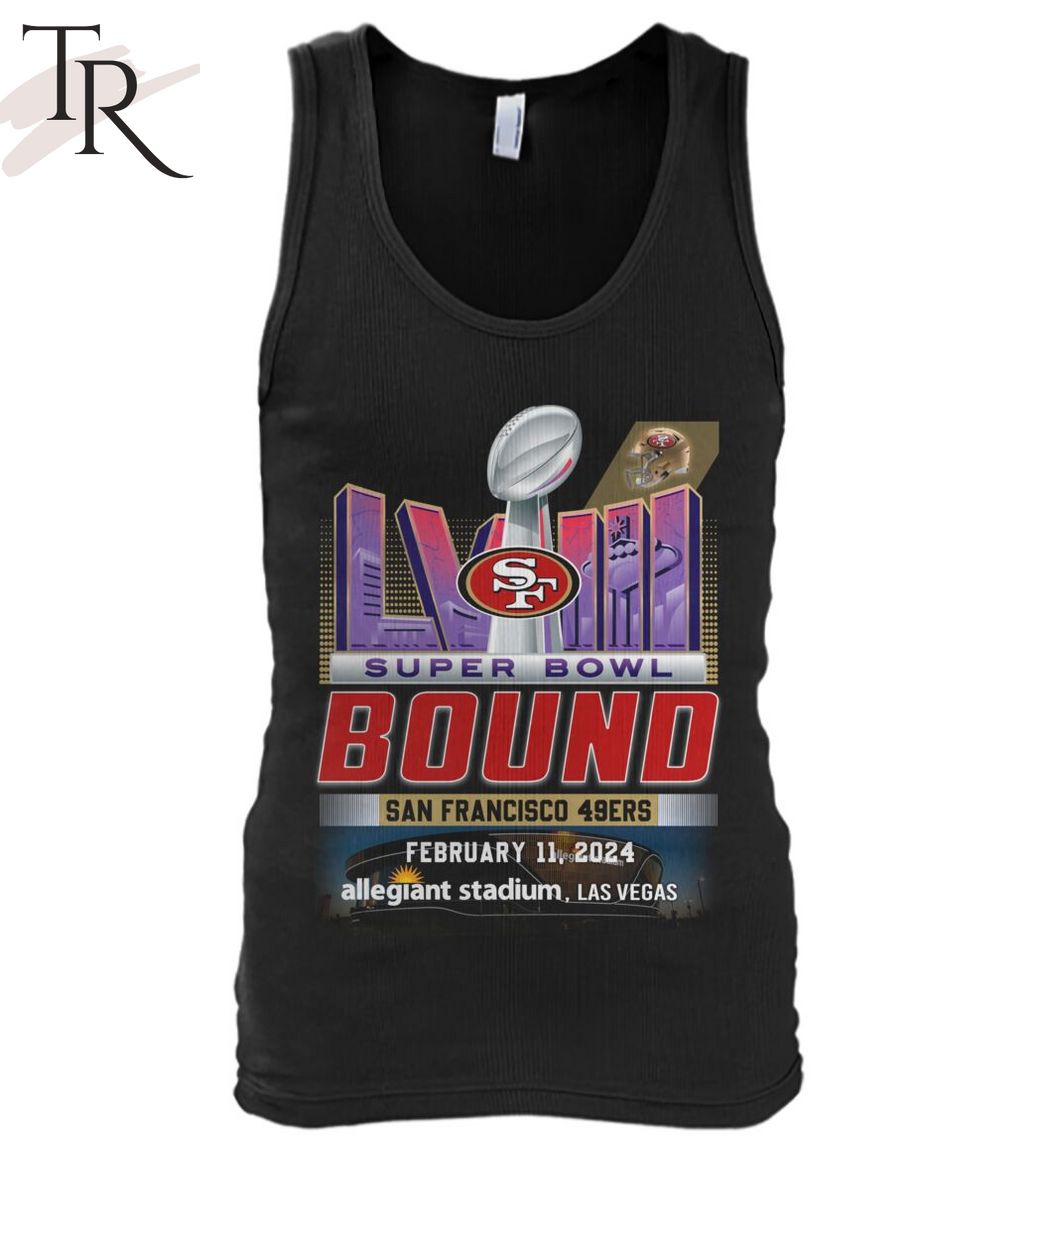 Super Bowl LVIII The Bound San Francisco 49ers February 11, 2024 Allegiant Stadium, Las Vegas T-Shirt